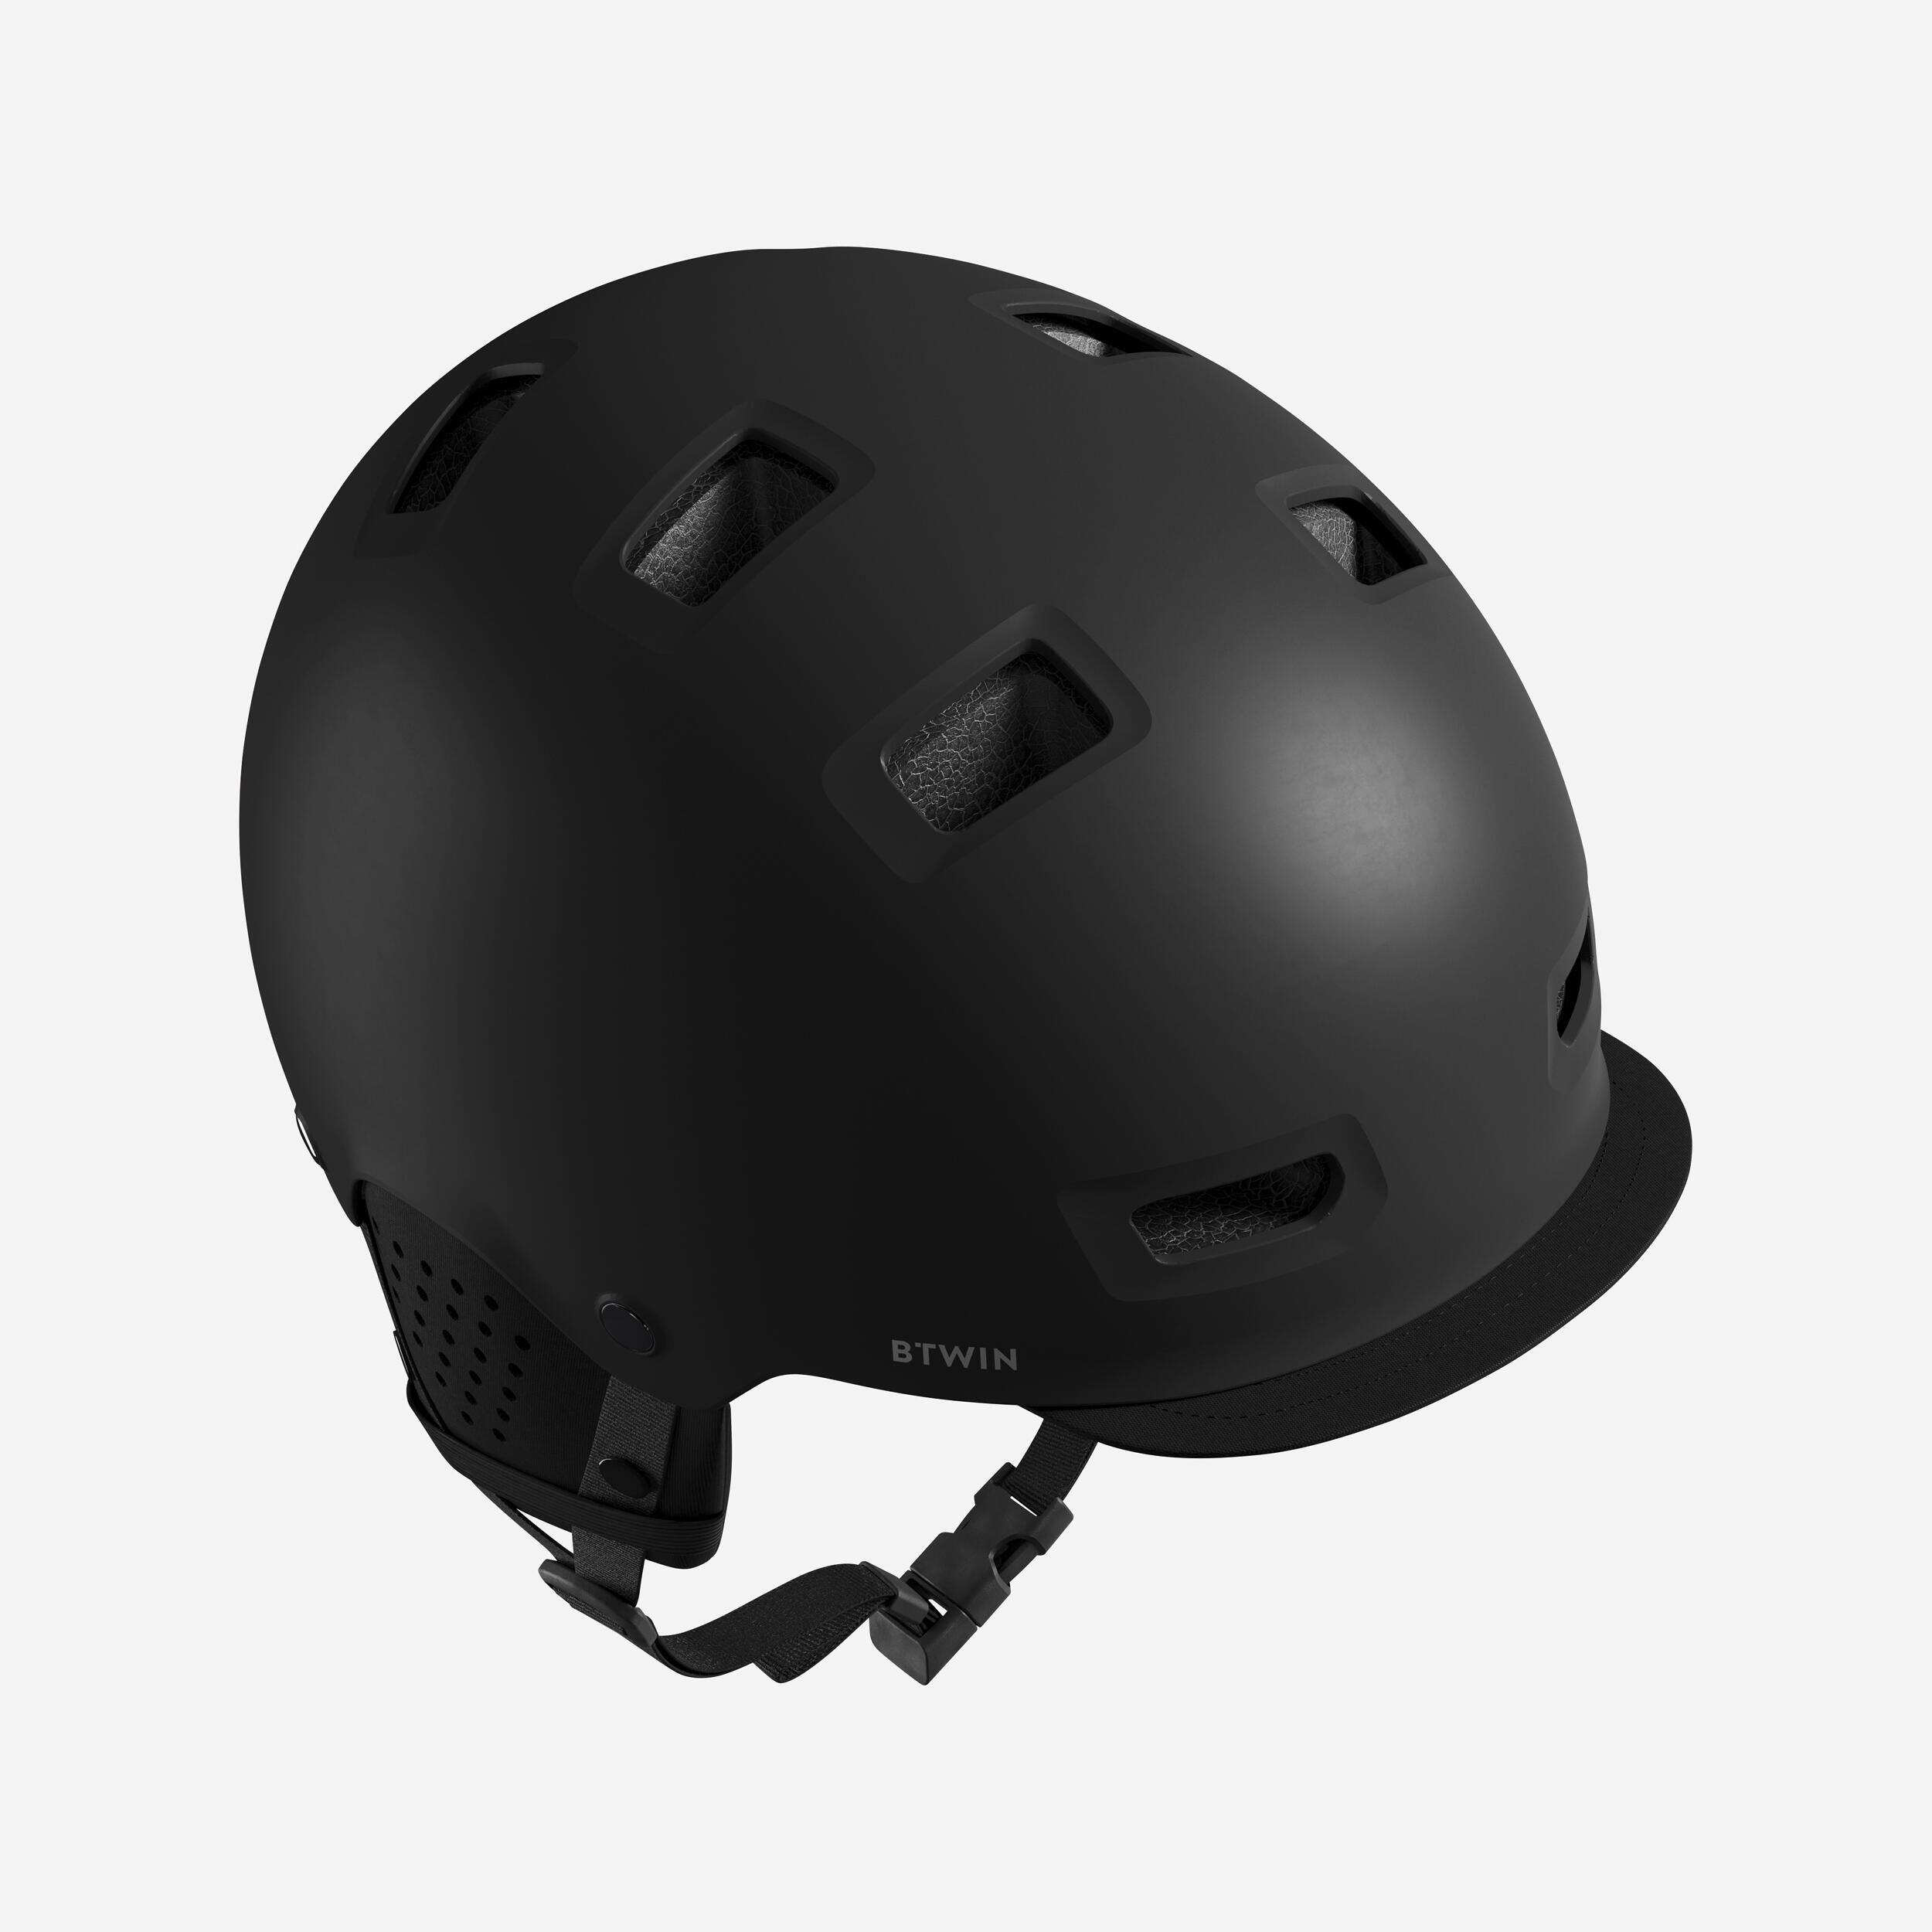 BTWIN 500 Urban Cycling Bowl Helmet - Black